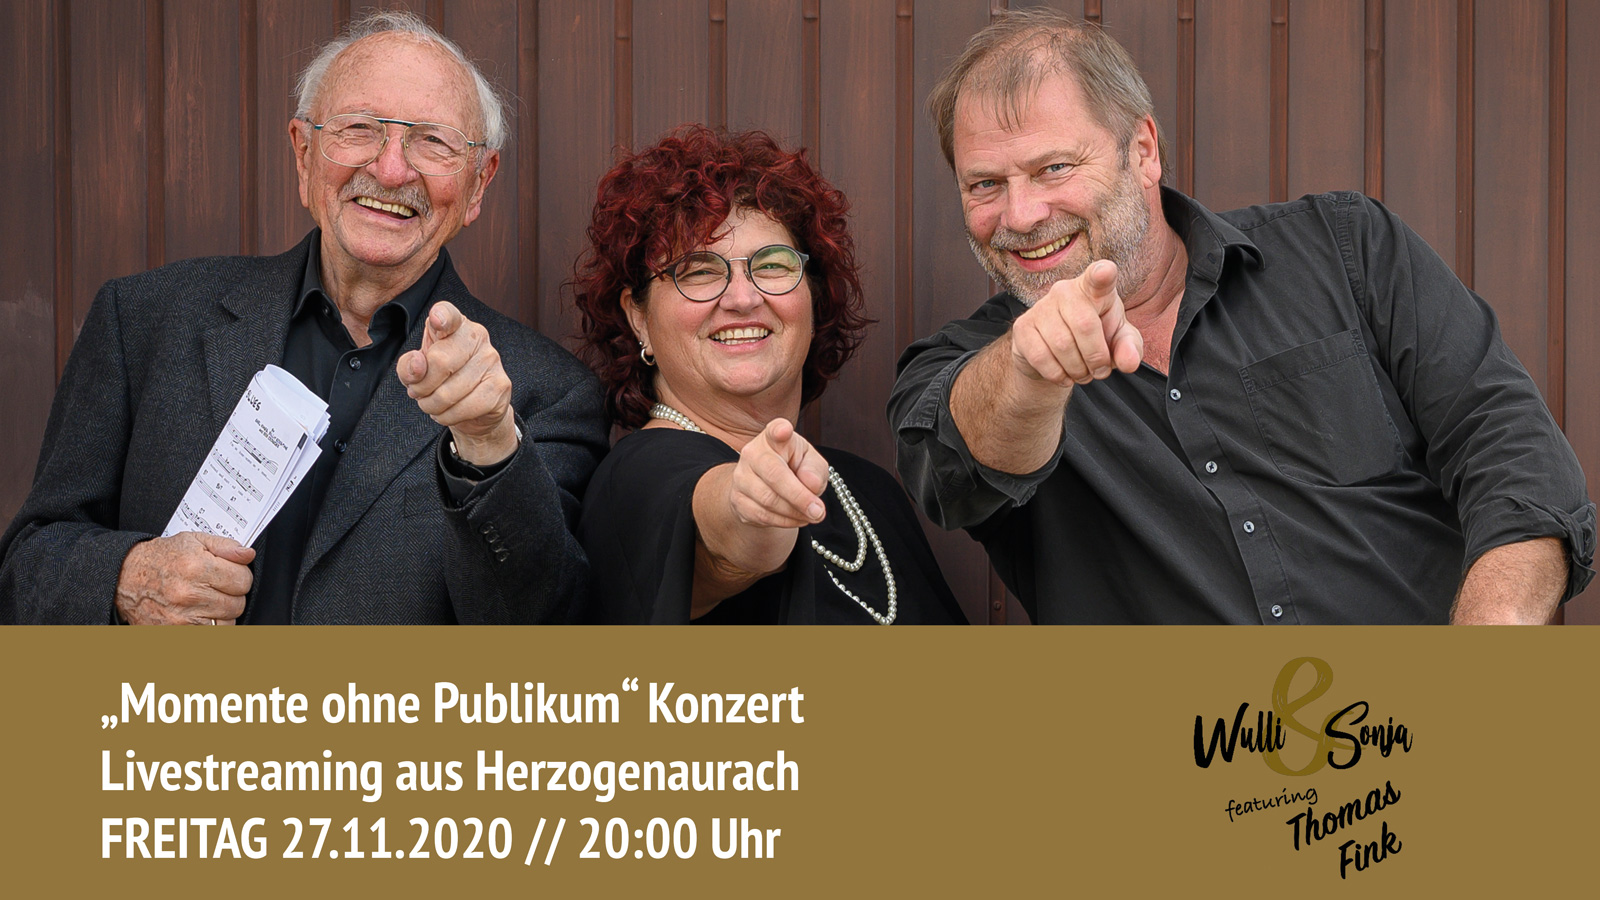 Wulli und Sonja feat. Thomas Fink Konzert 2020